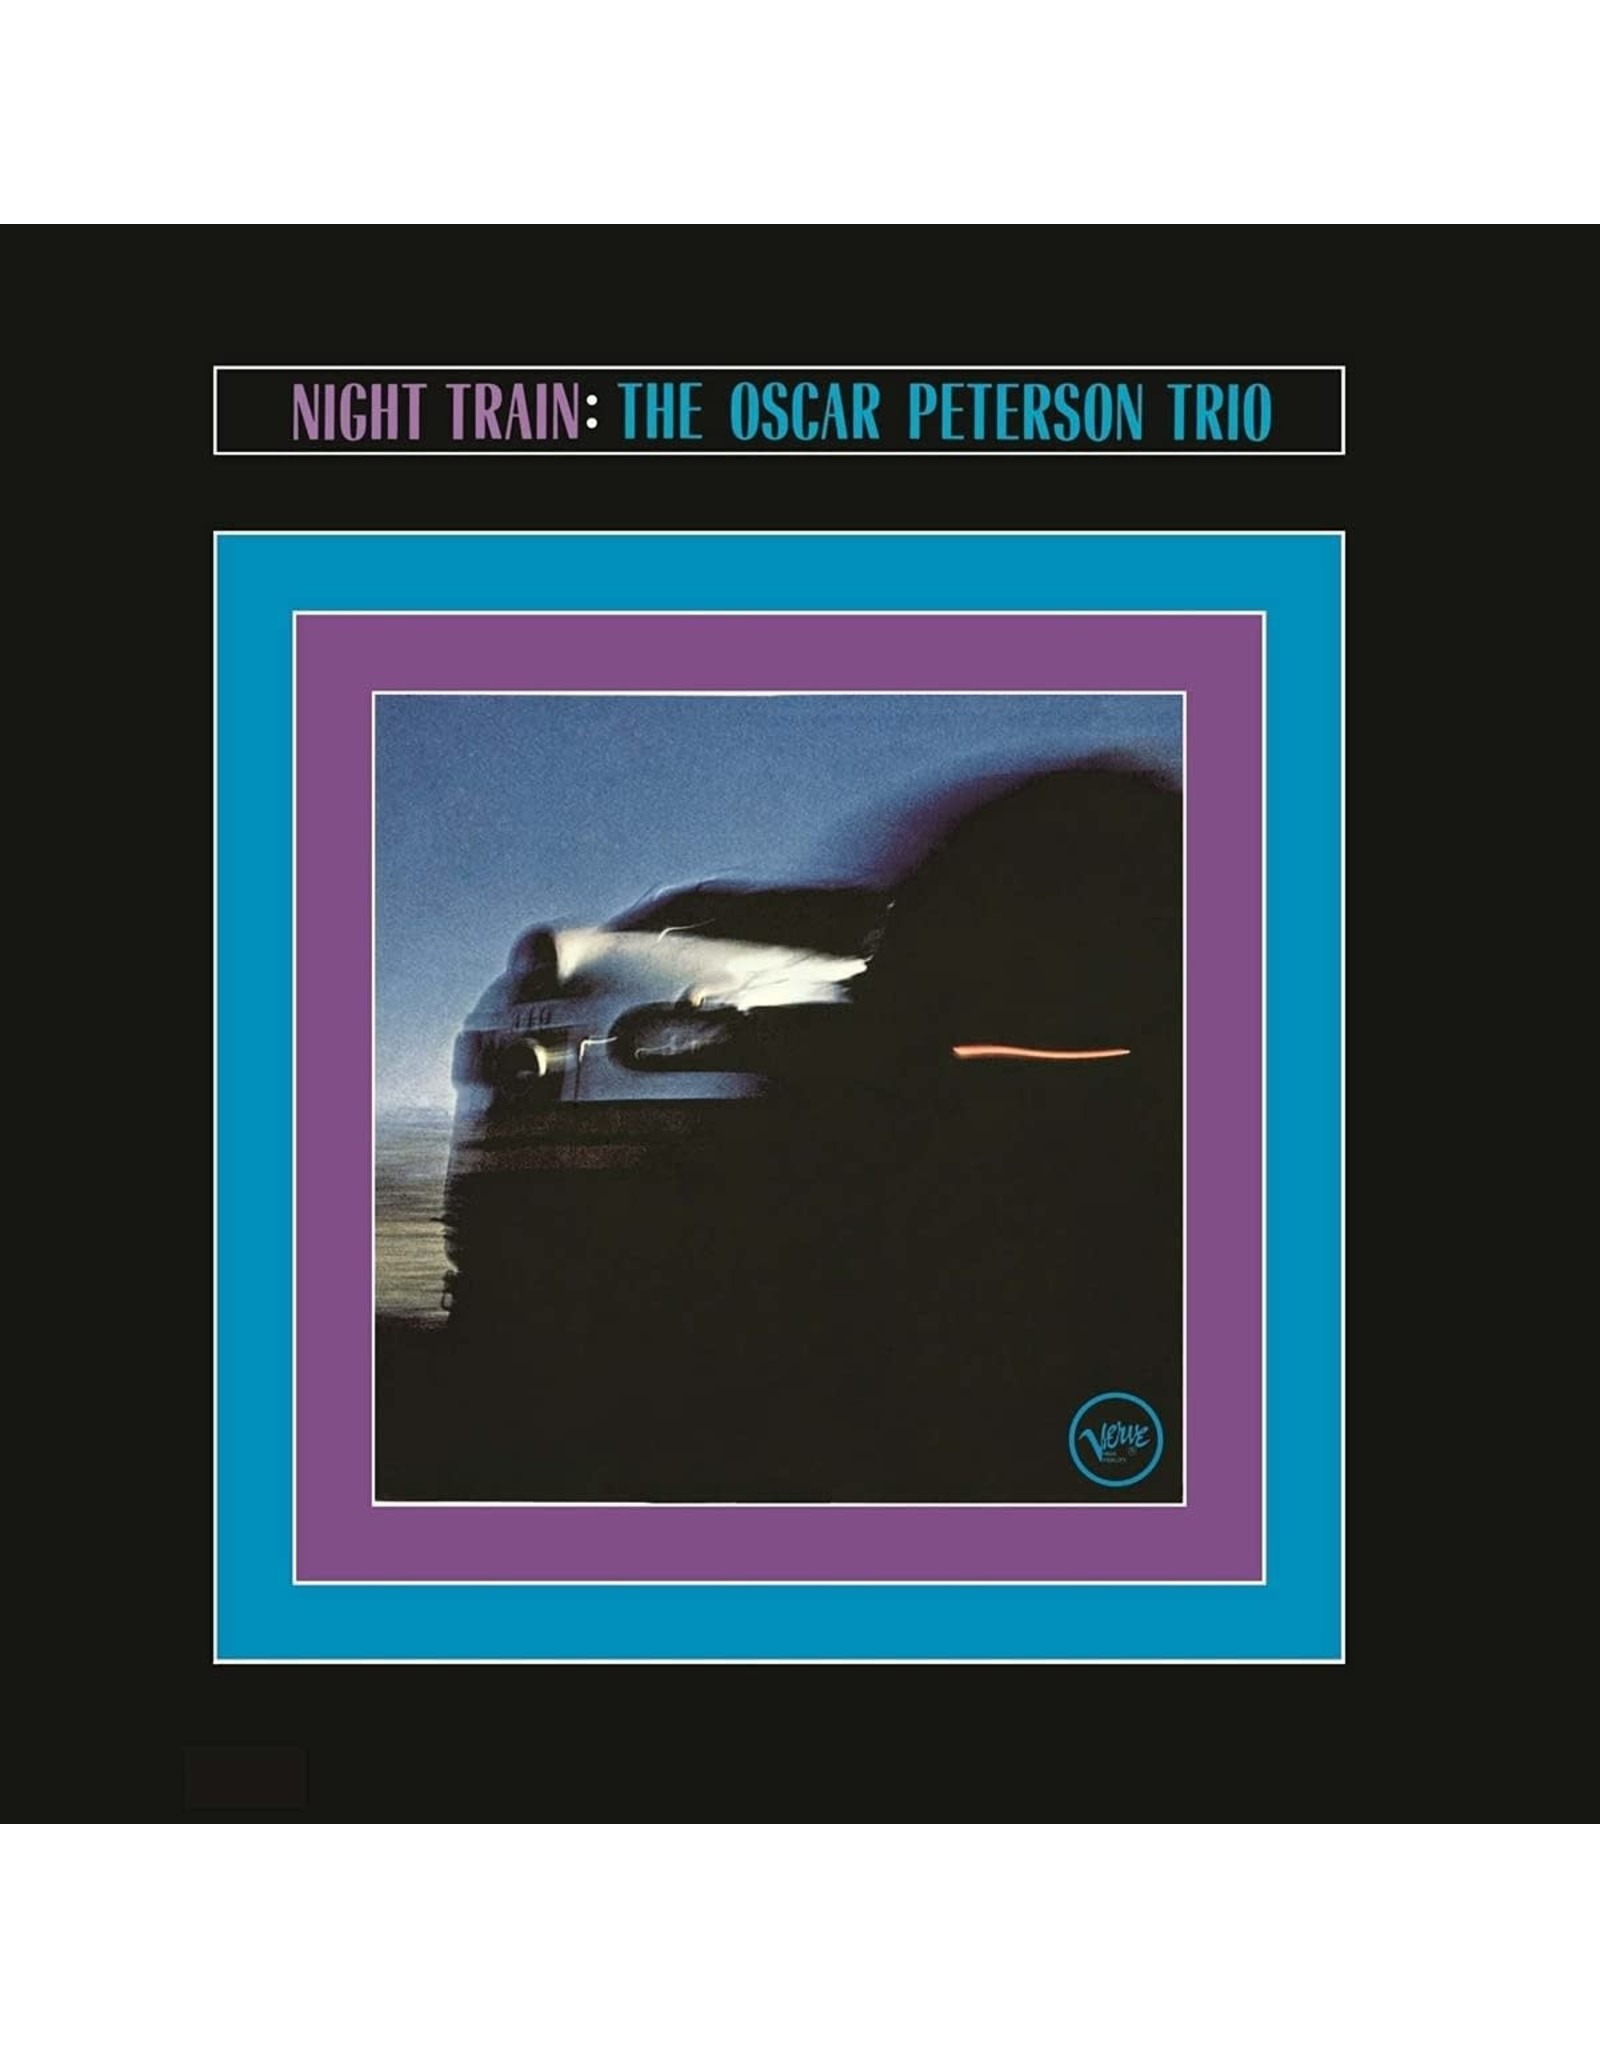 Oscar Peterson Trio - Night Train (Acoustic Sounds Series)